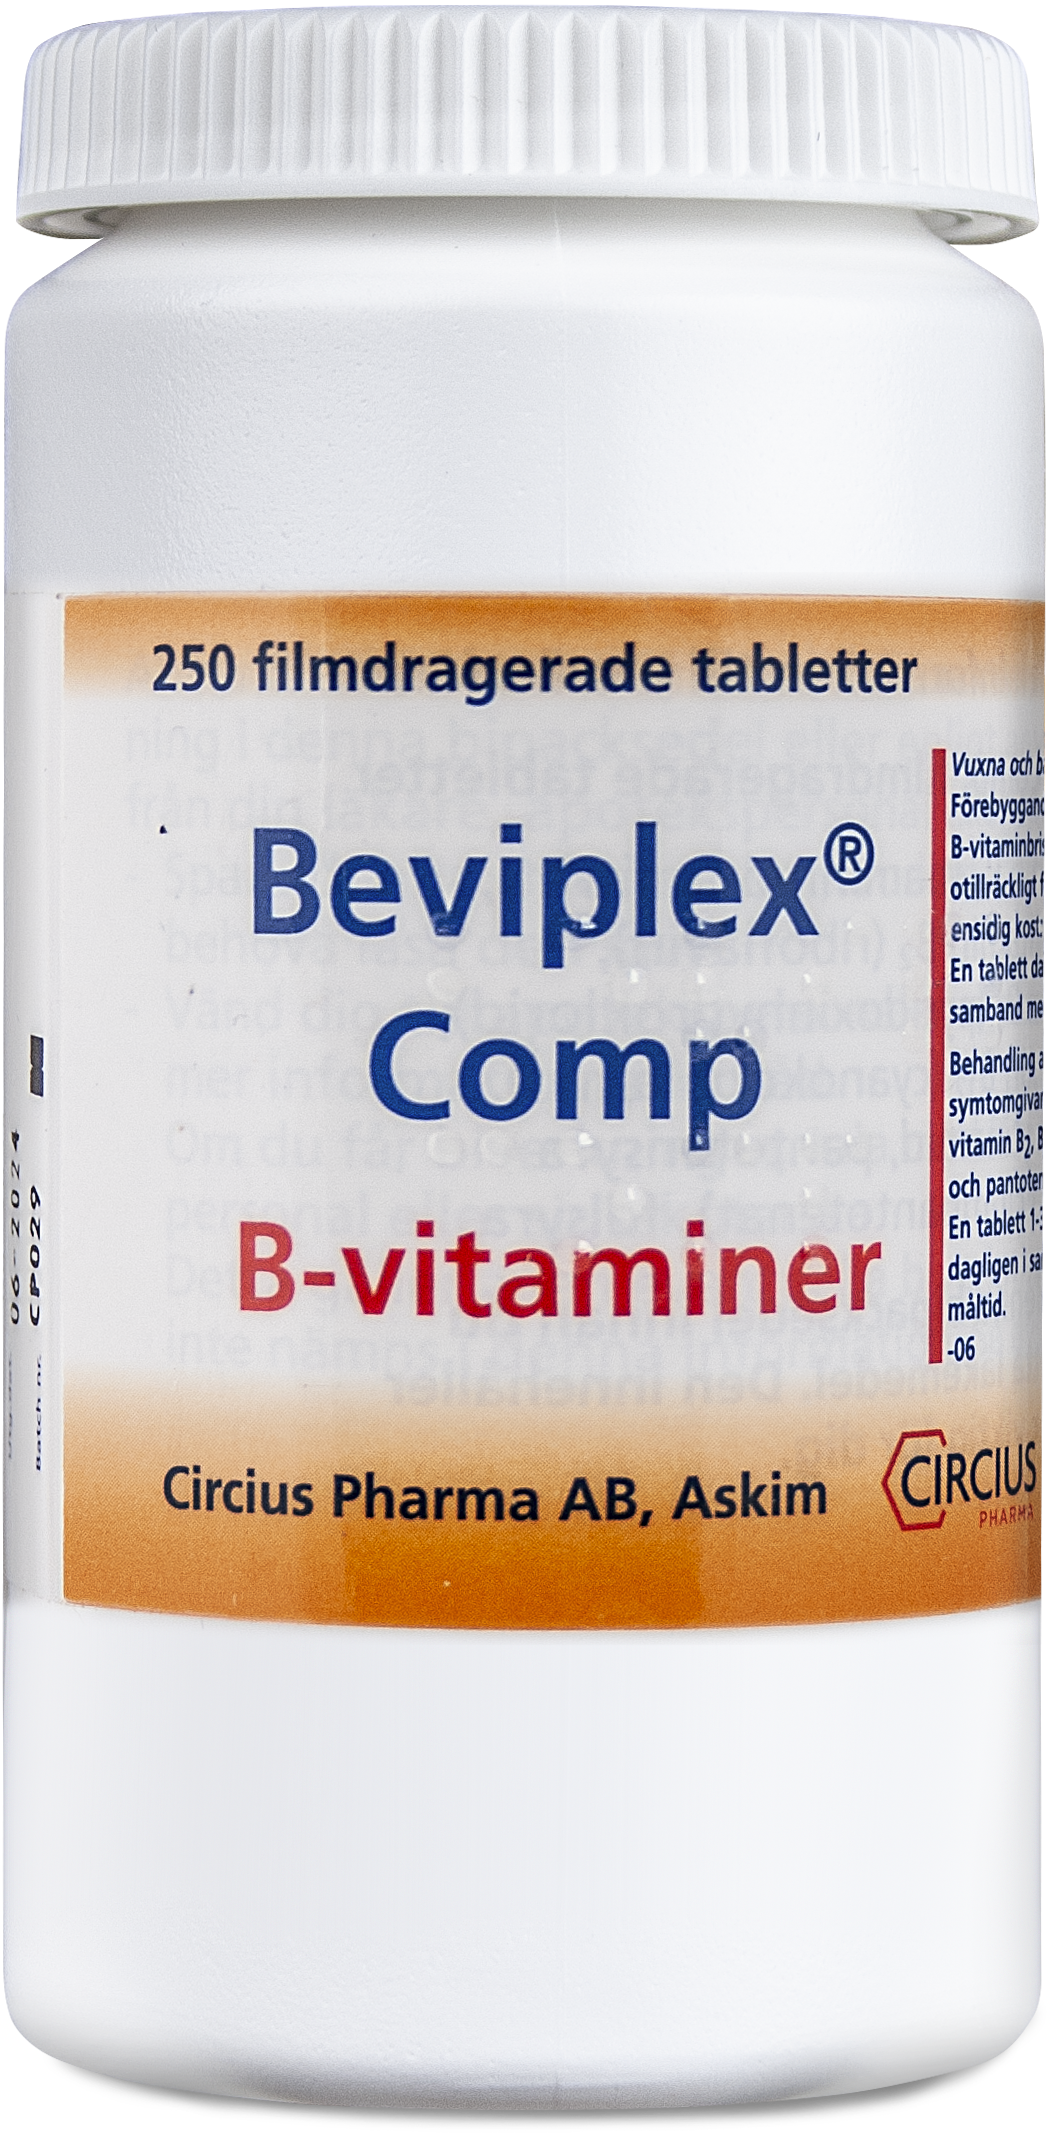 Beviplex Comp 250 tabletter